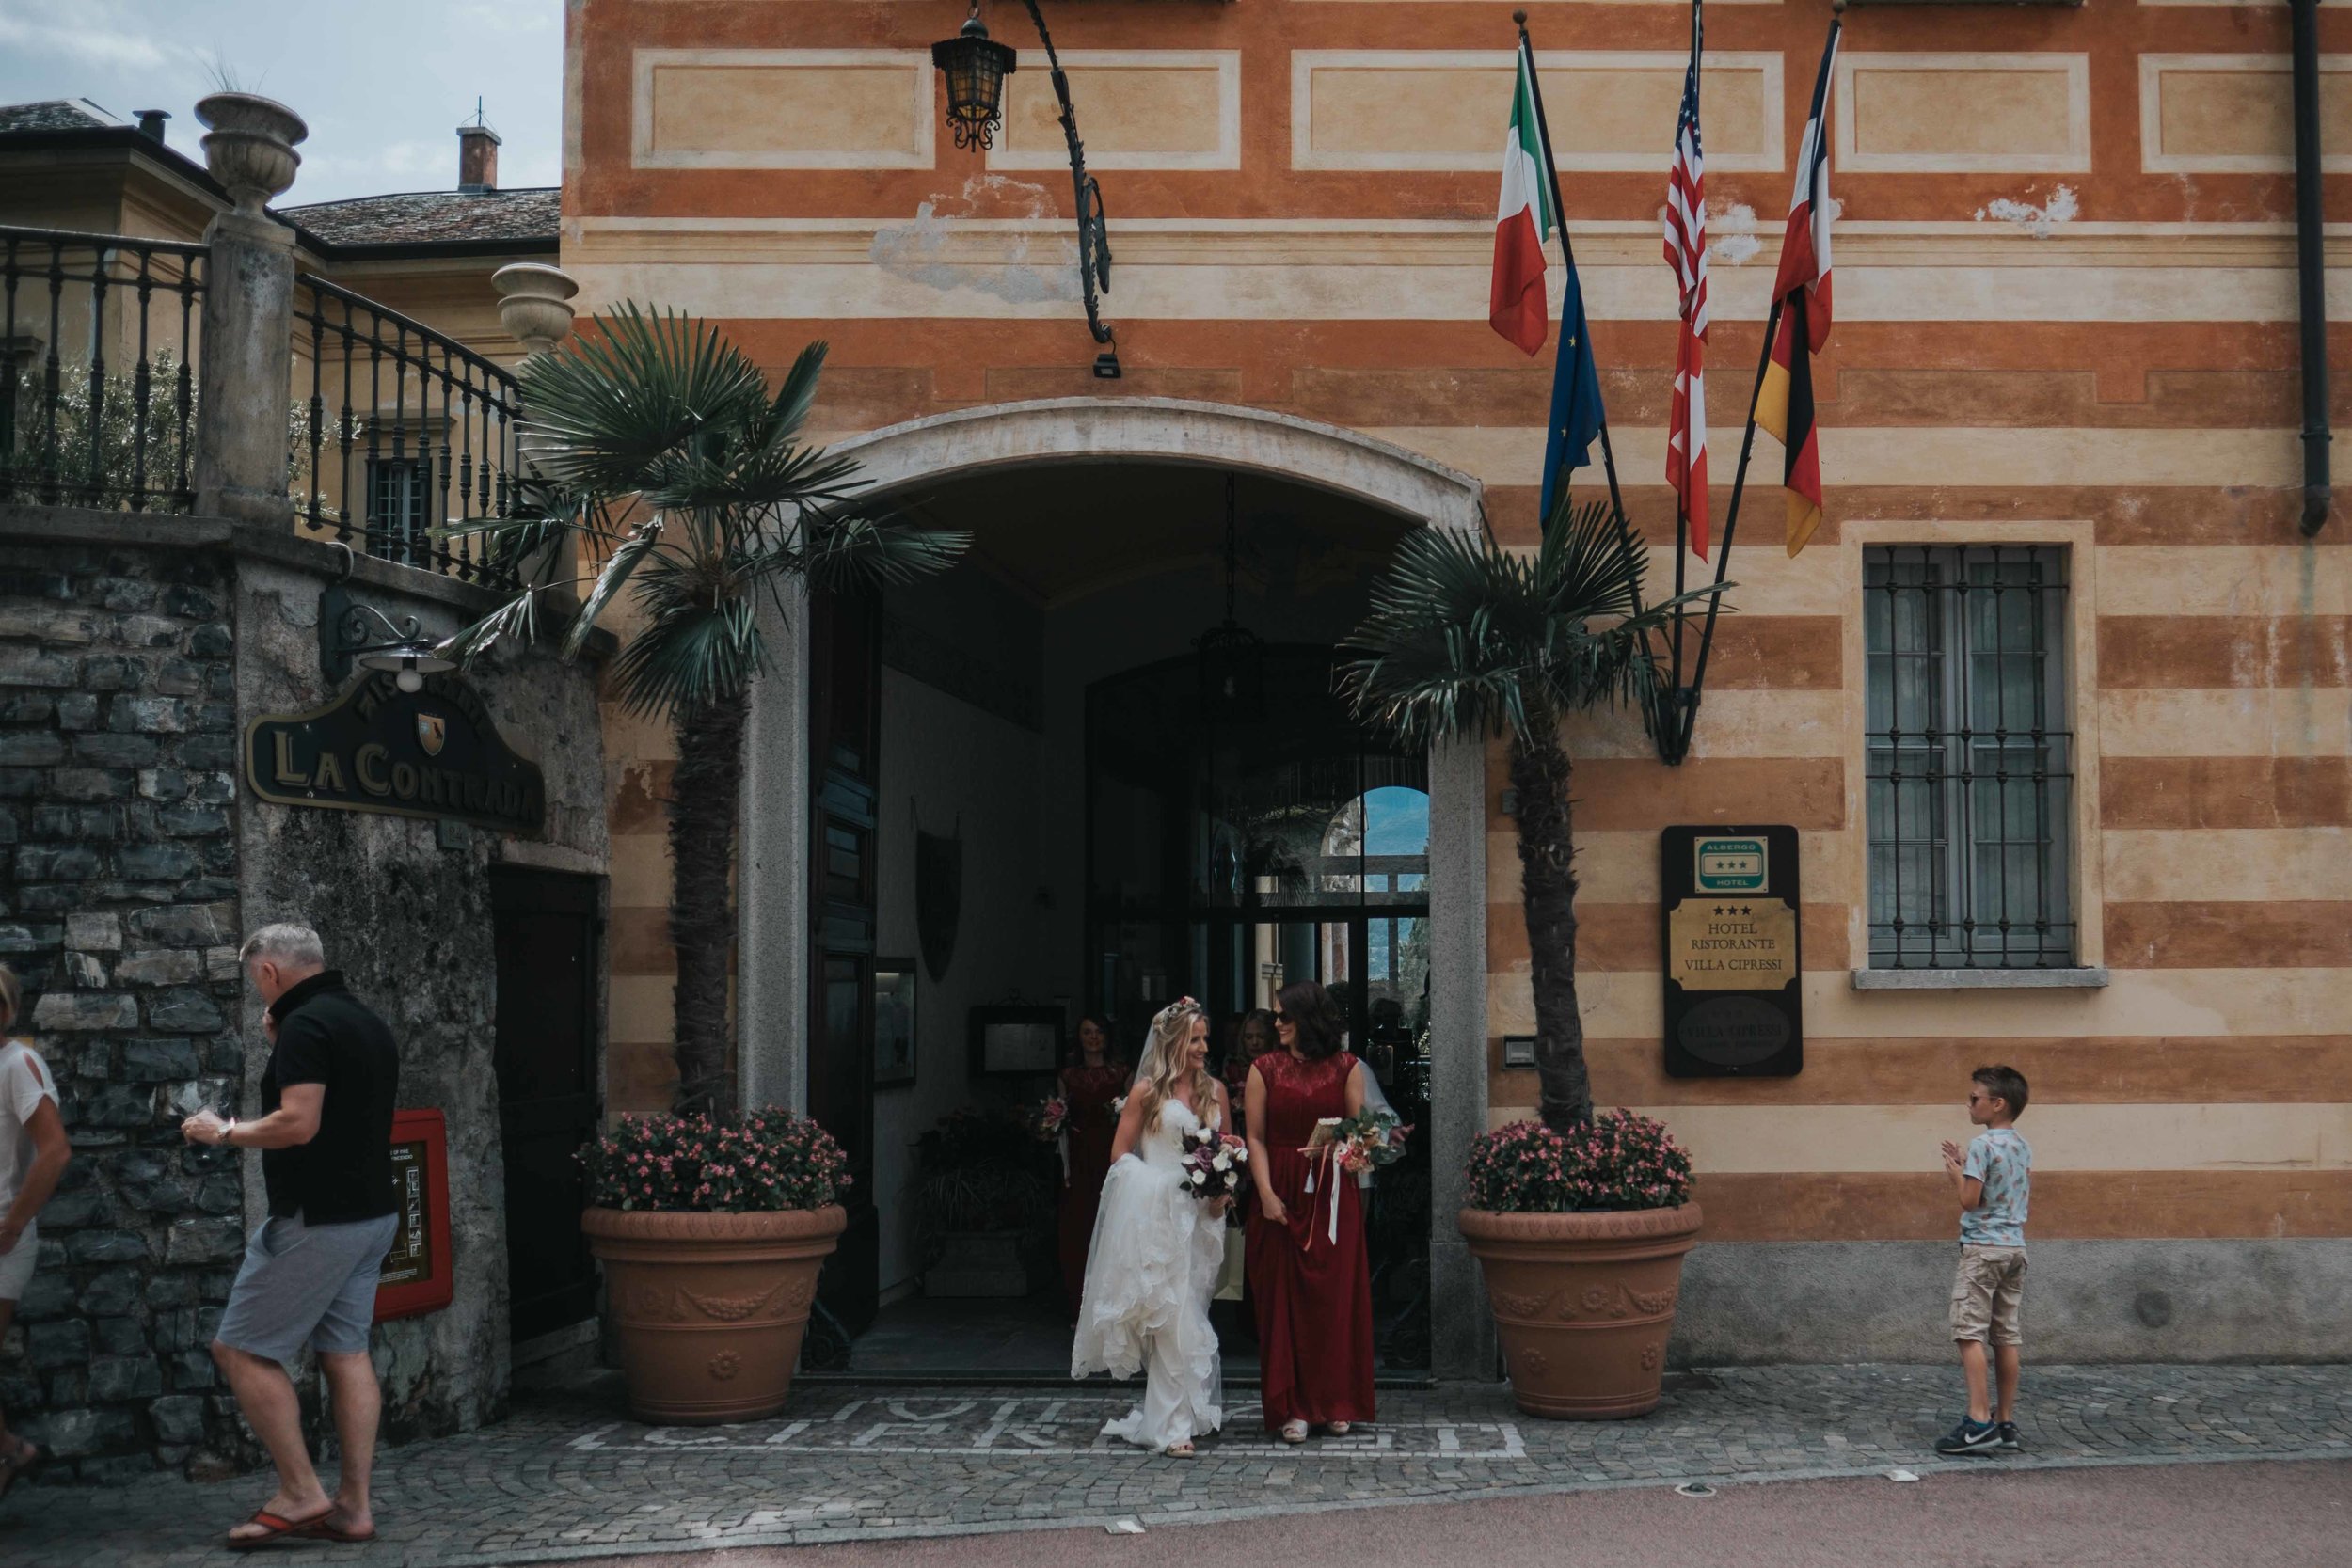 Laco Como Italy destination wedding photographer cheshire north west england documentry photography (33 of 117).jpg